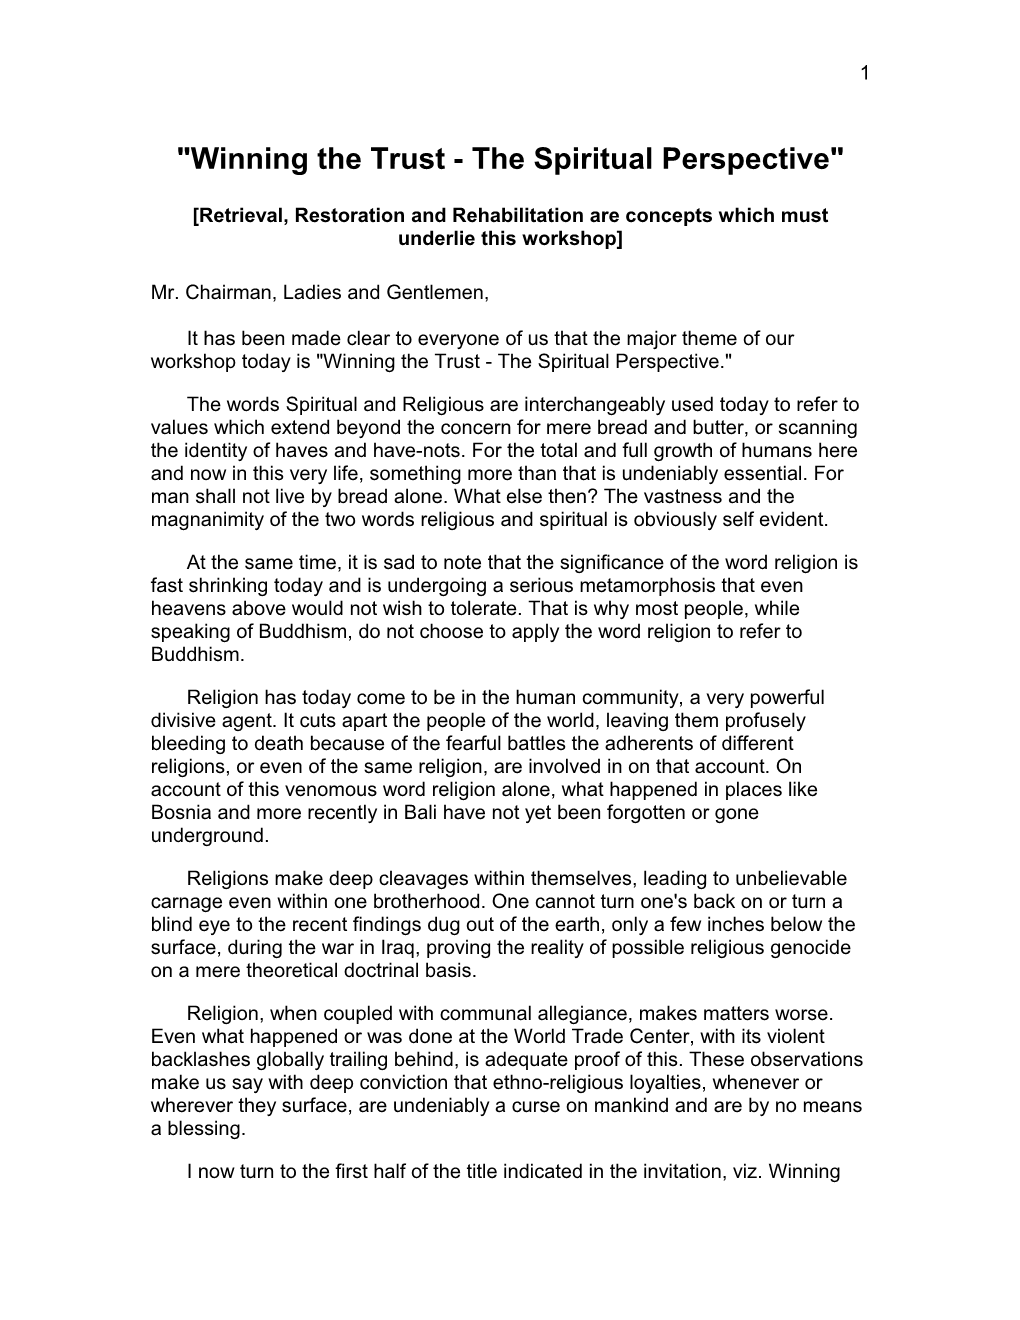 Winning the Trust - the Spiritual Perspective (Retrieval, Restoration and Rehabilitation